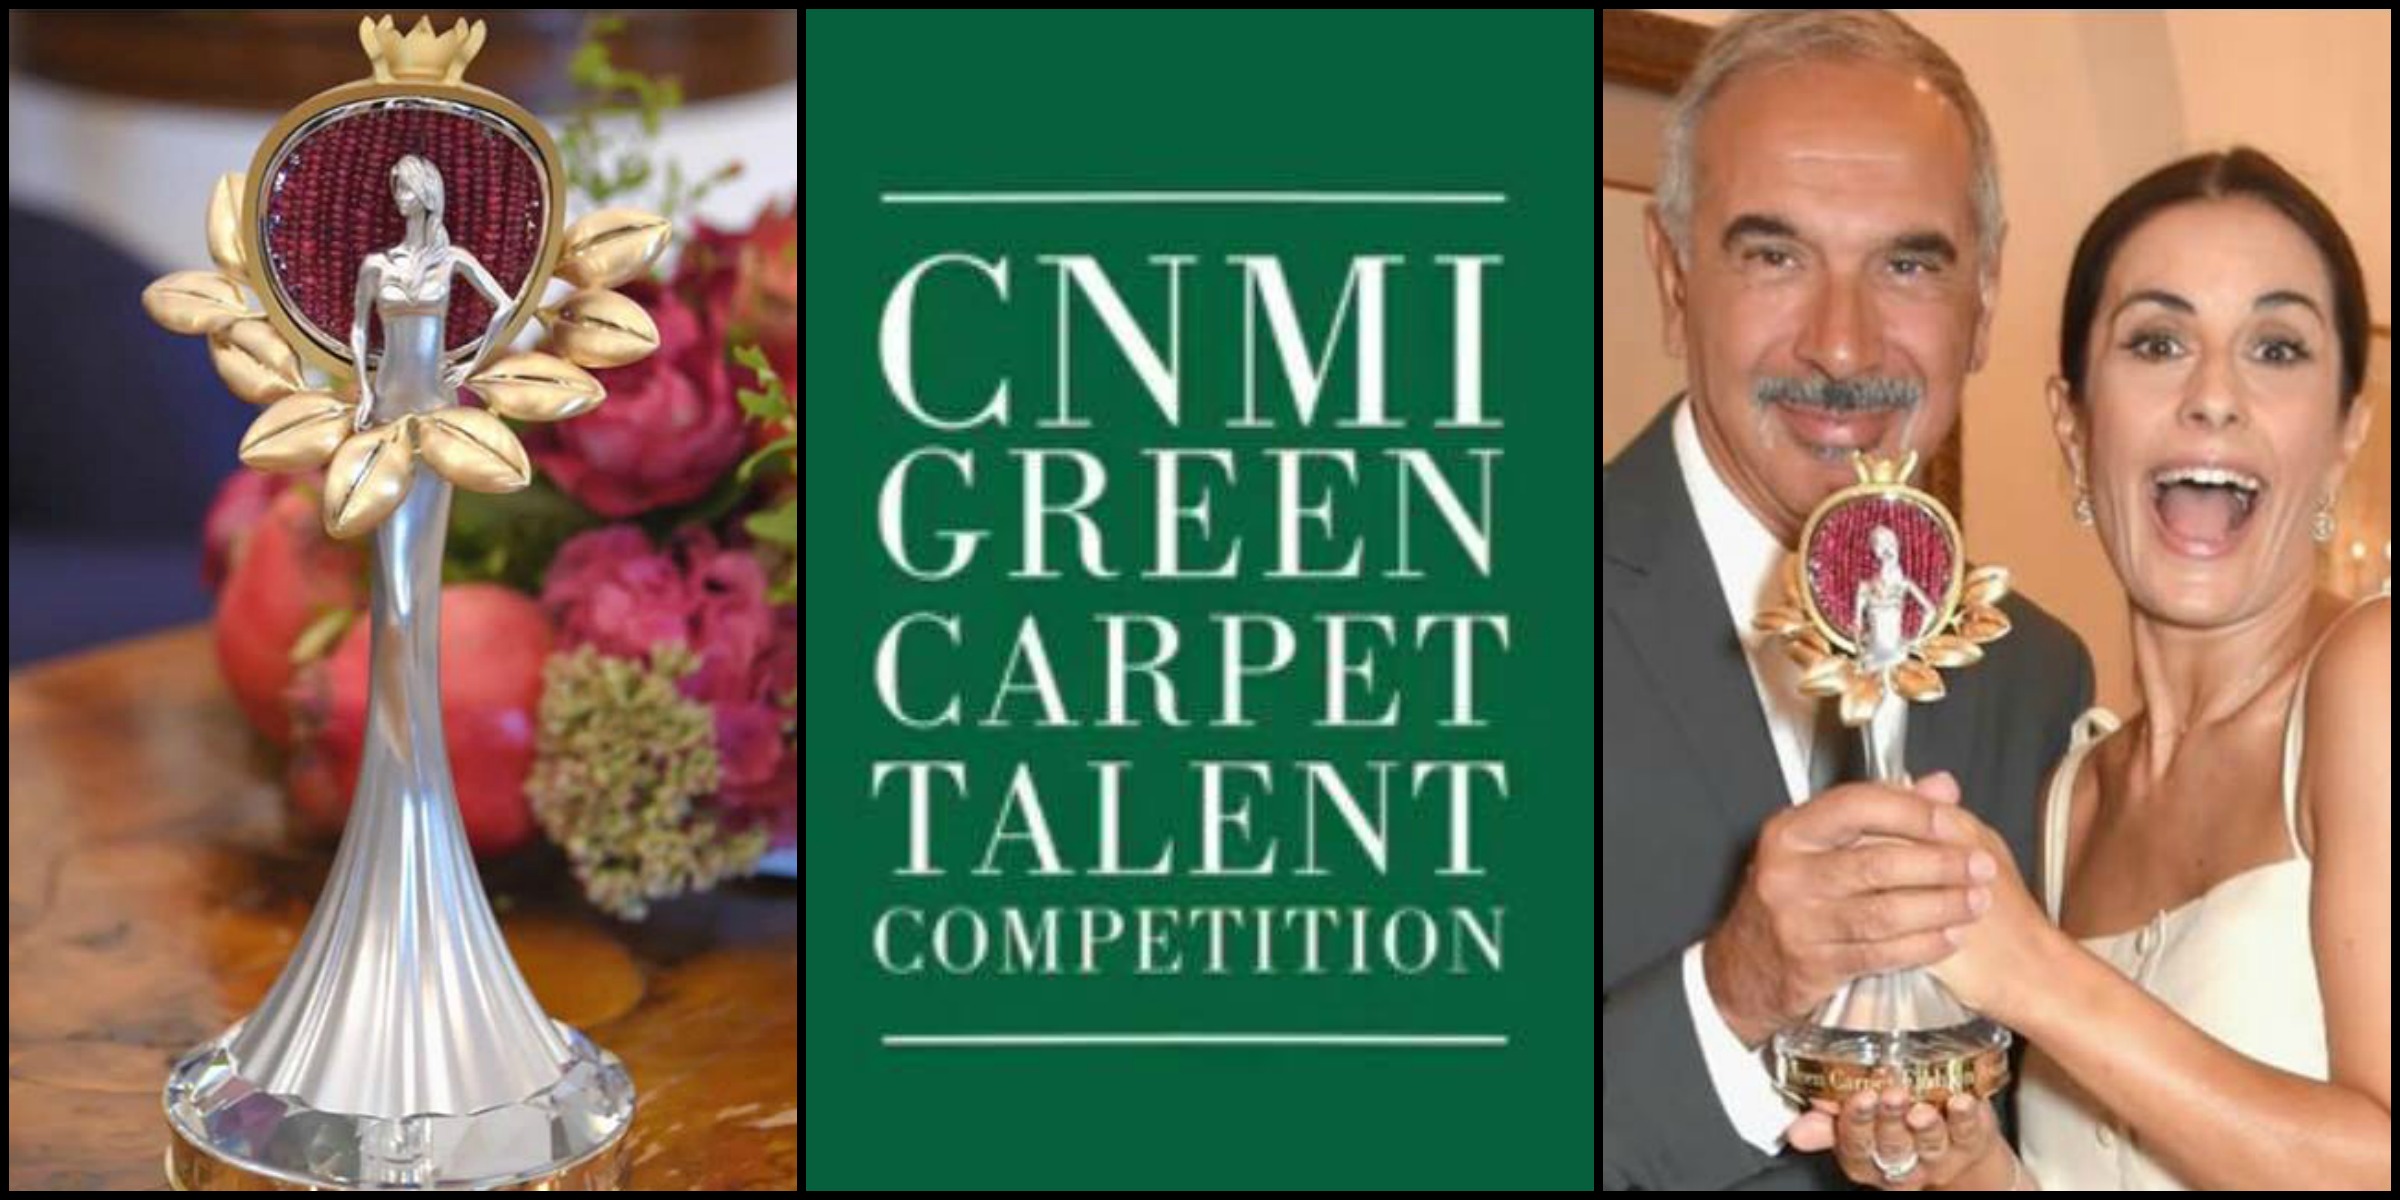 CNMI Green Carpet Talent Competition